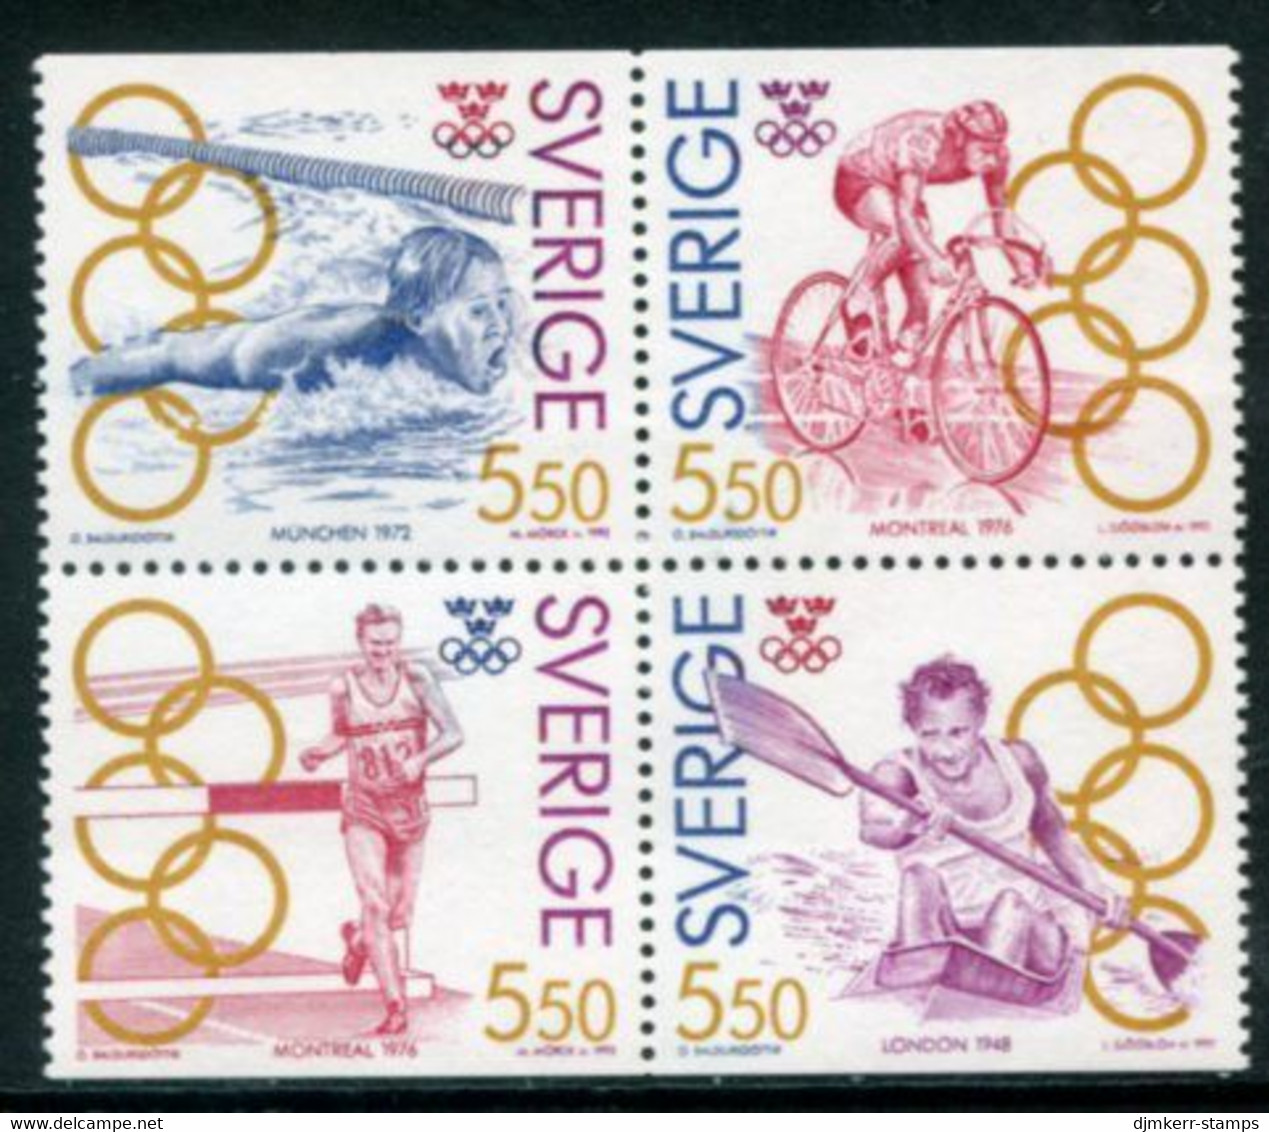 SWEDEN 1992 Olympic Medal Winners III MNH / **   Michel 1721-24 - Nuevos